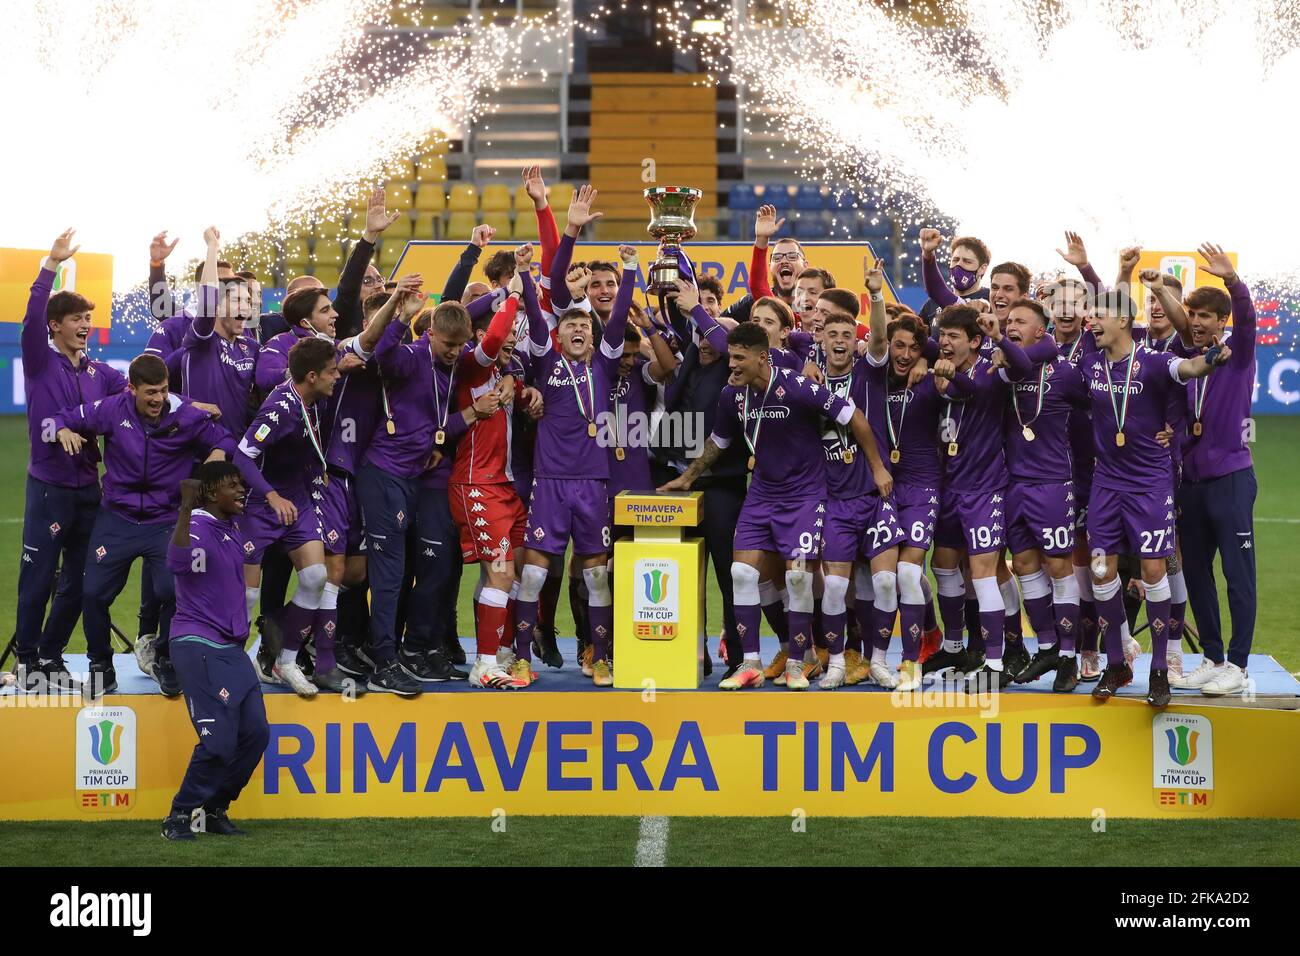 ACF Fiorentina U19 vs Lazio U19, Campionato Primavera 1 TIMvision